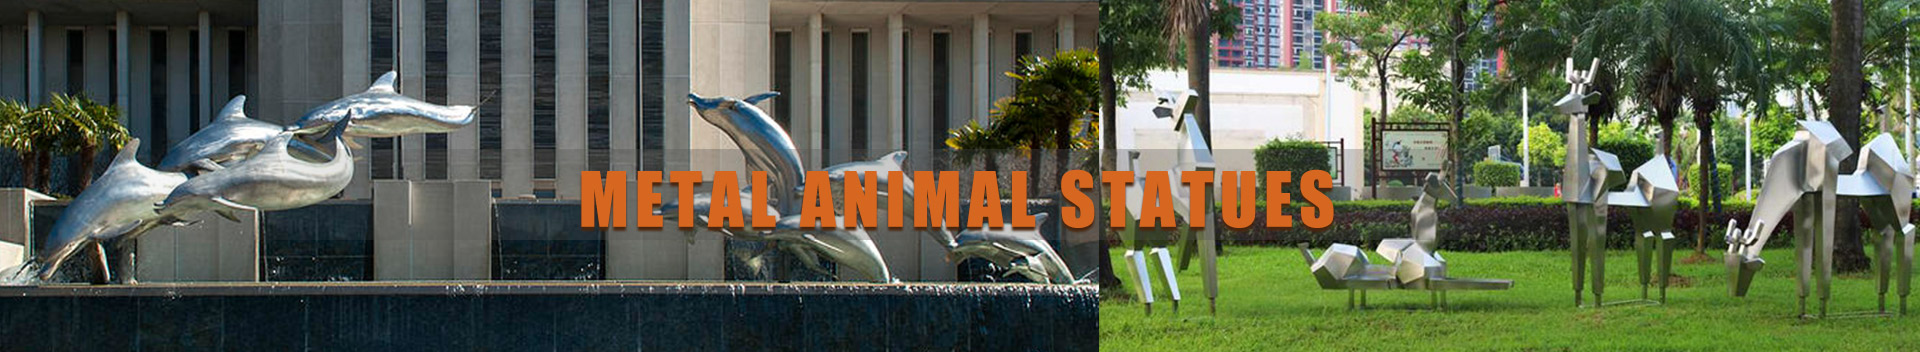 metal animal statues